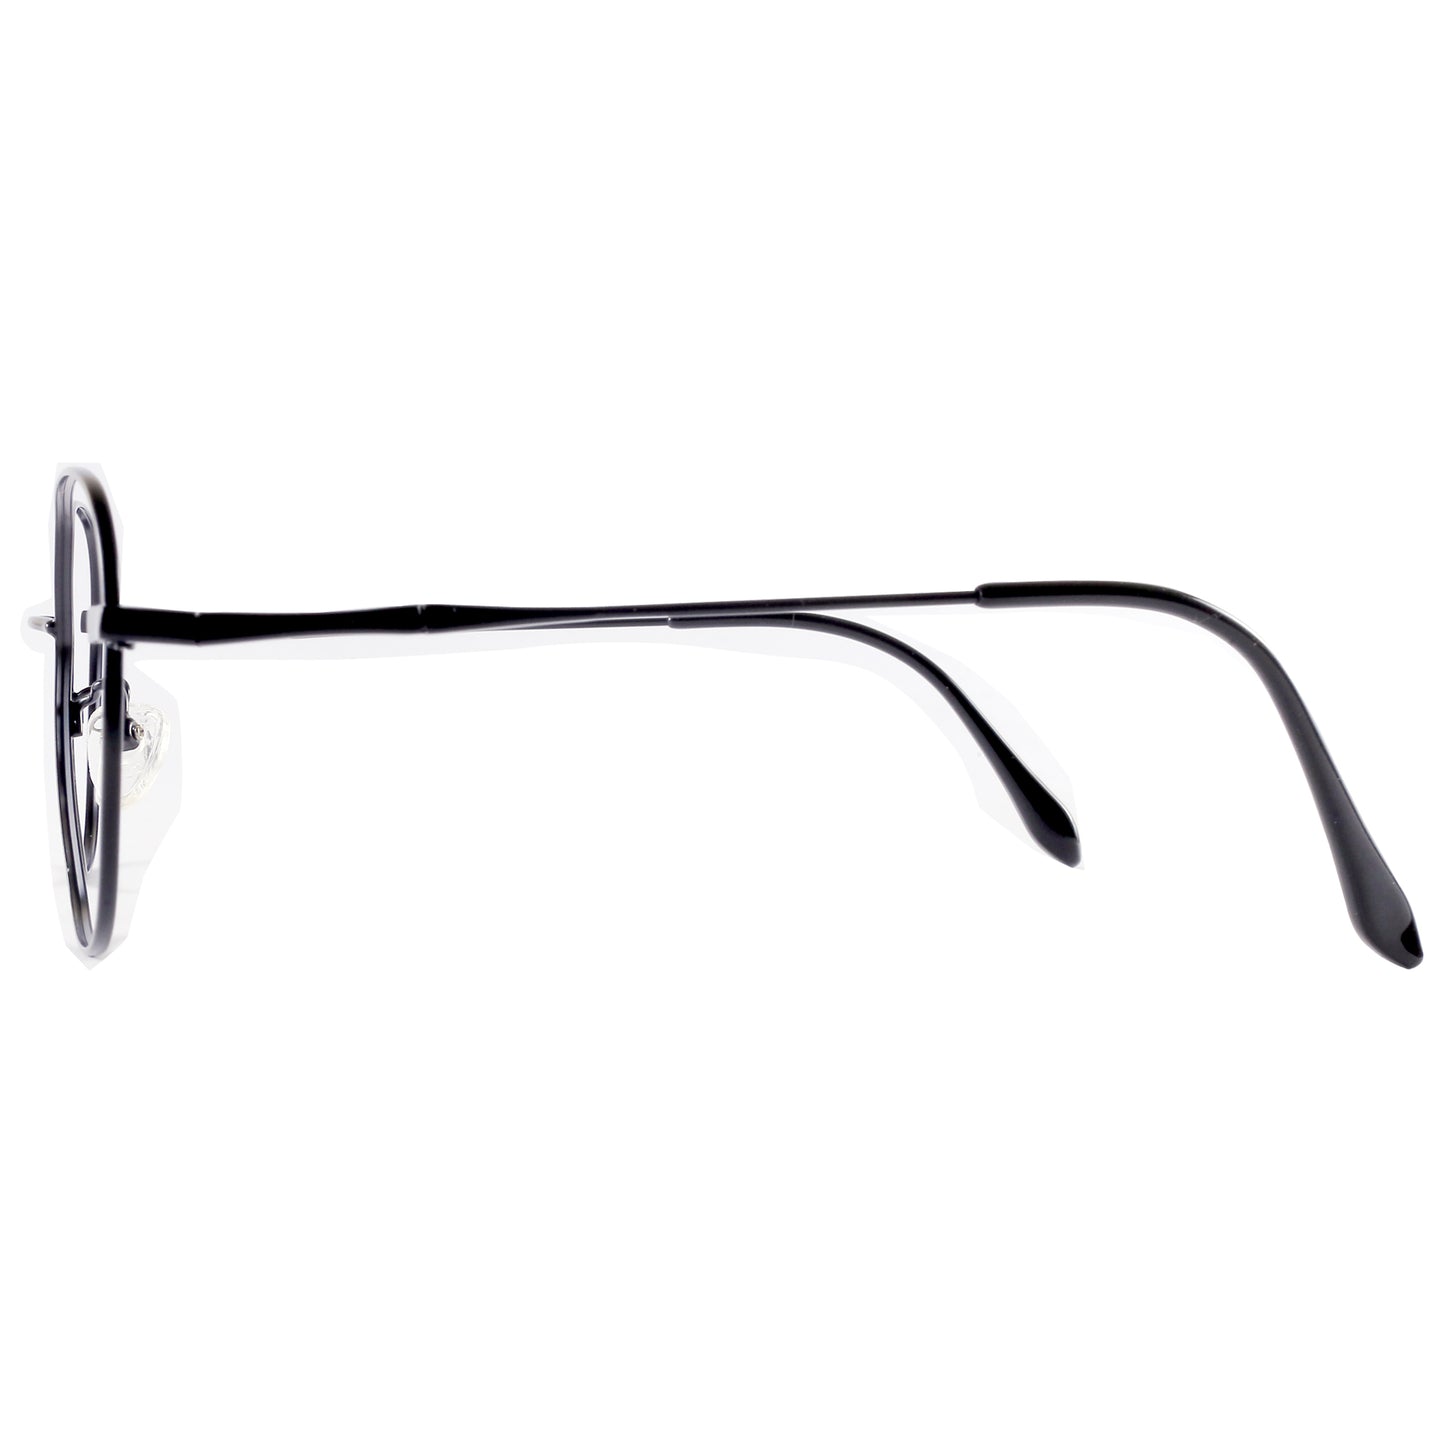 Loscomun Computer Glasses Black Round Eyeglasses